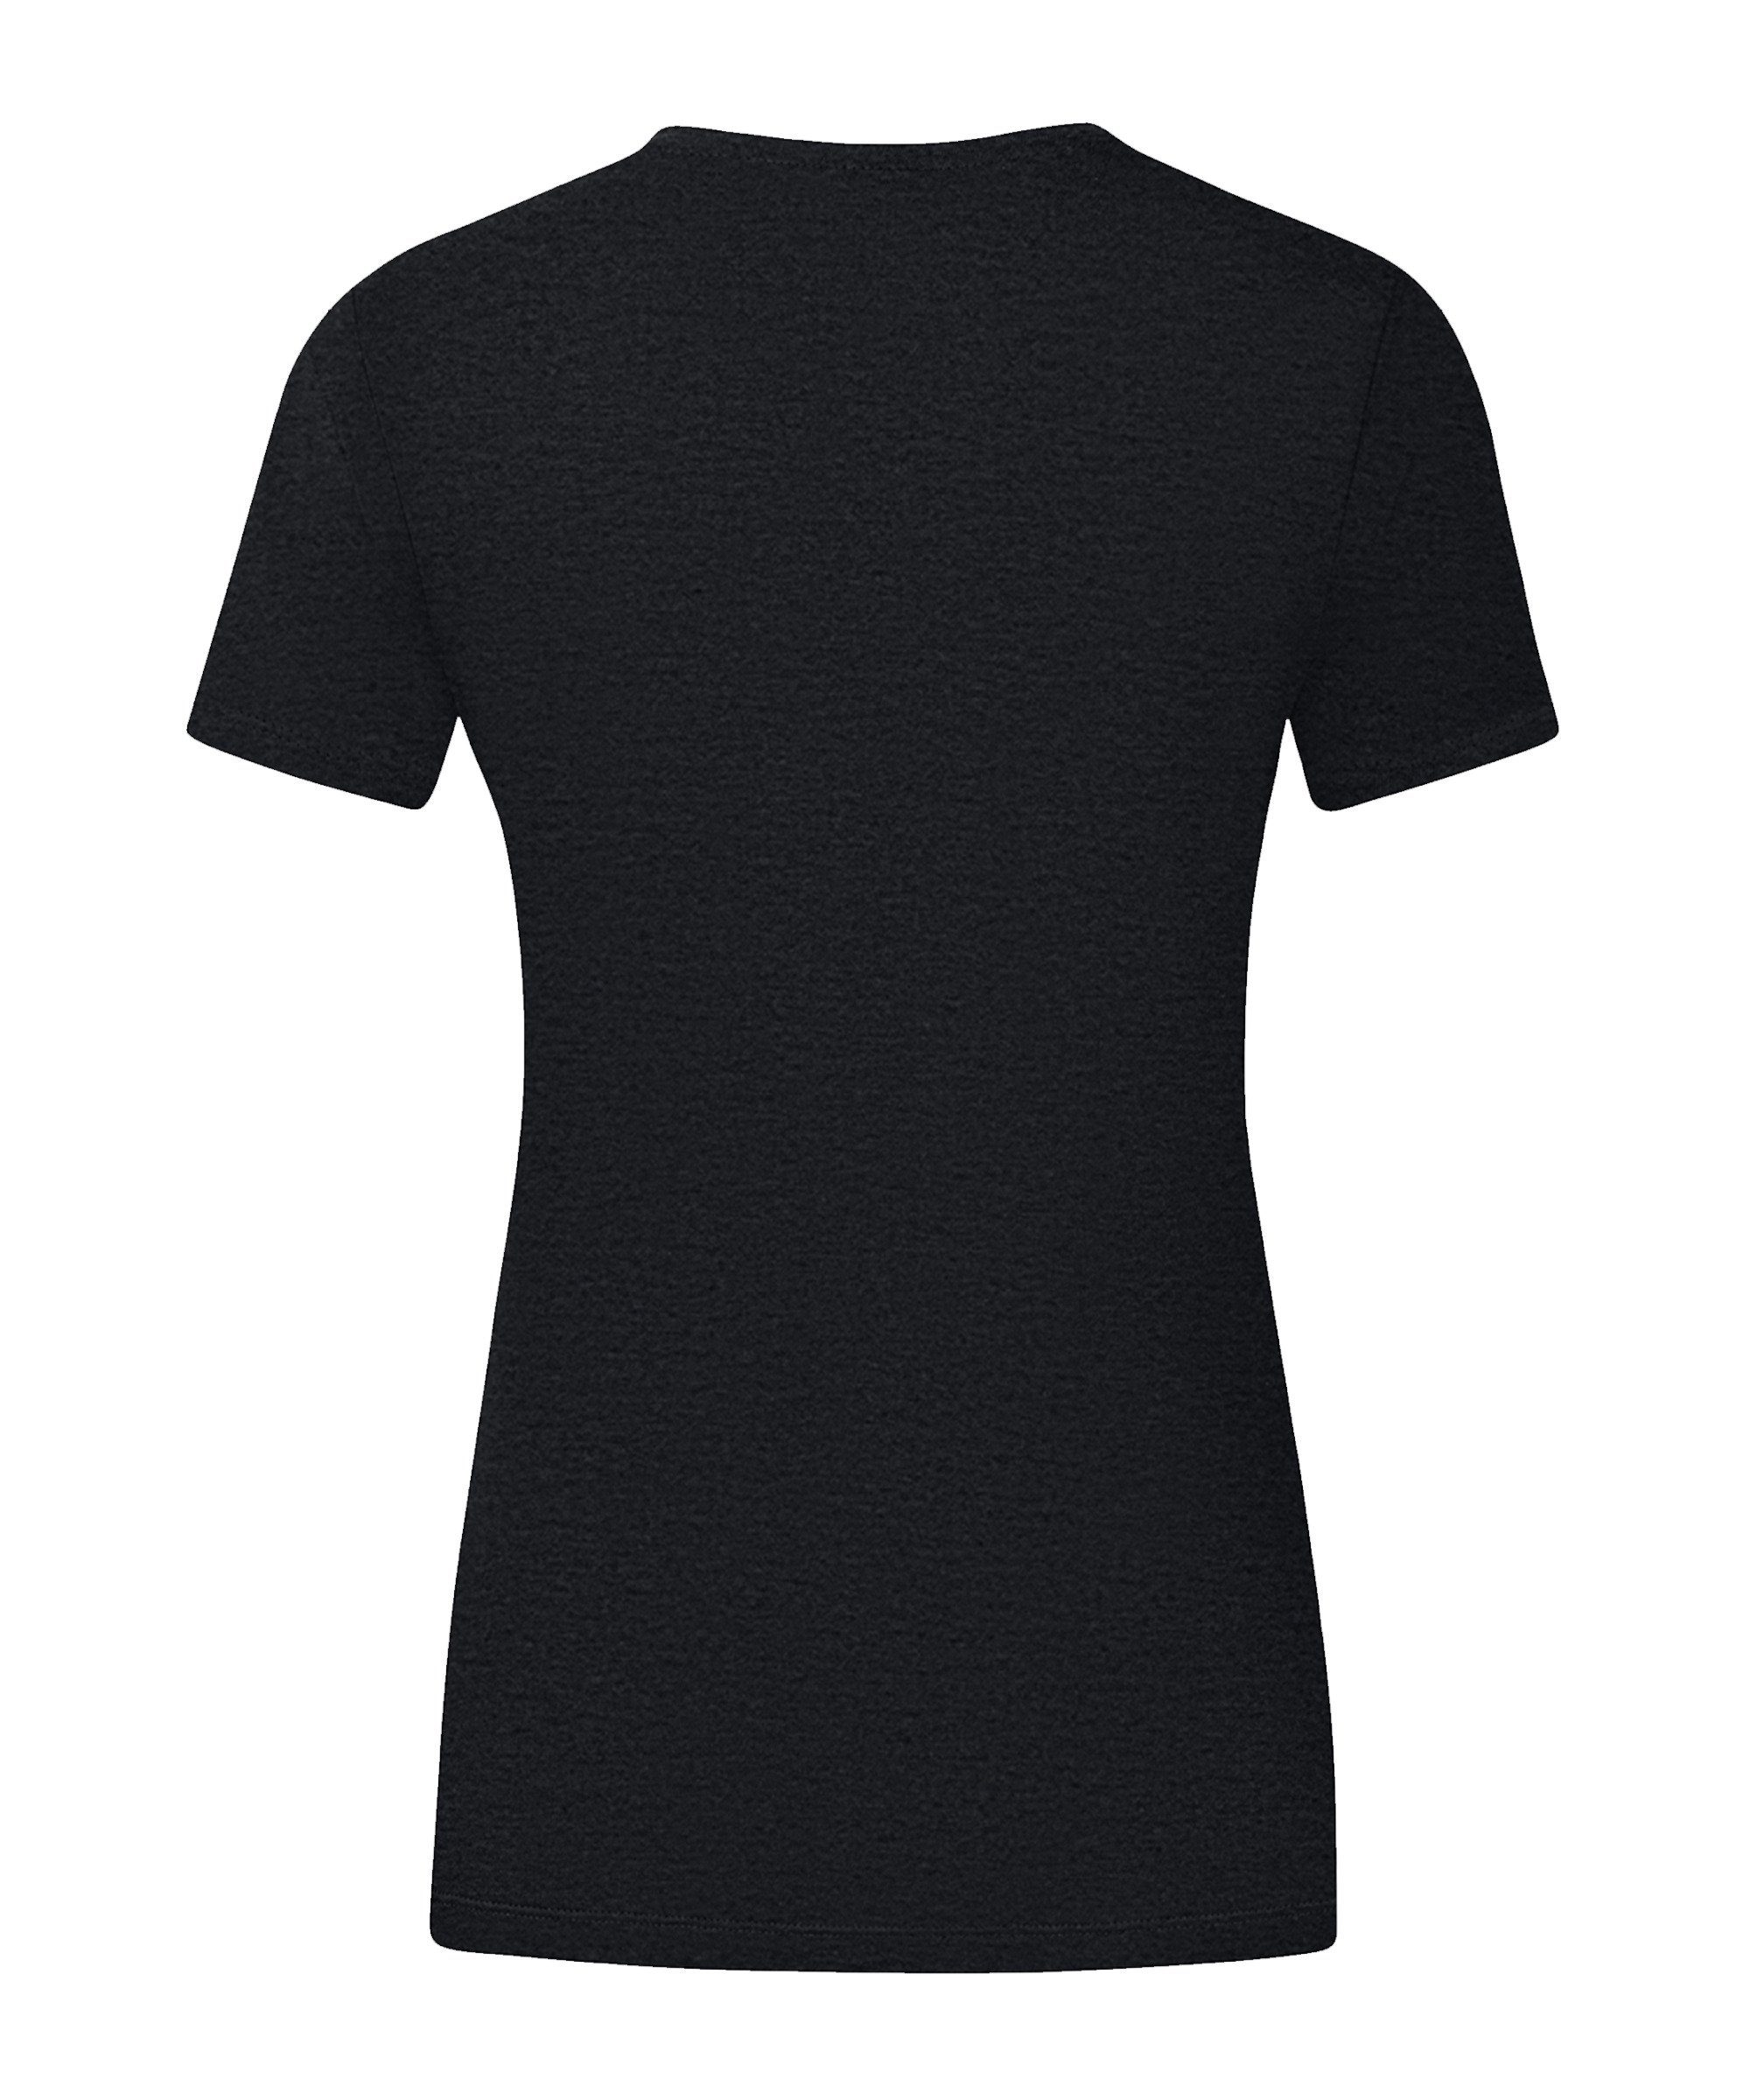 Promo default Jako Damen T-Shirt schwarzorange T-Shirt